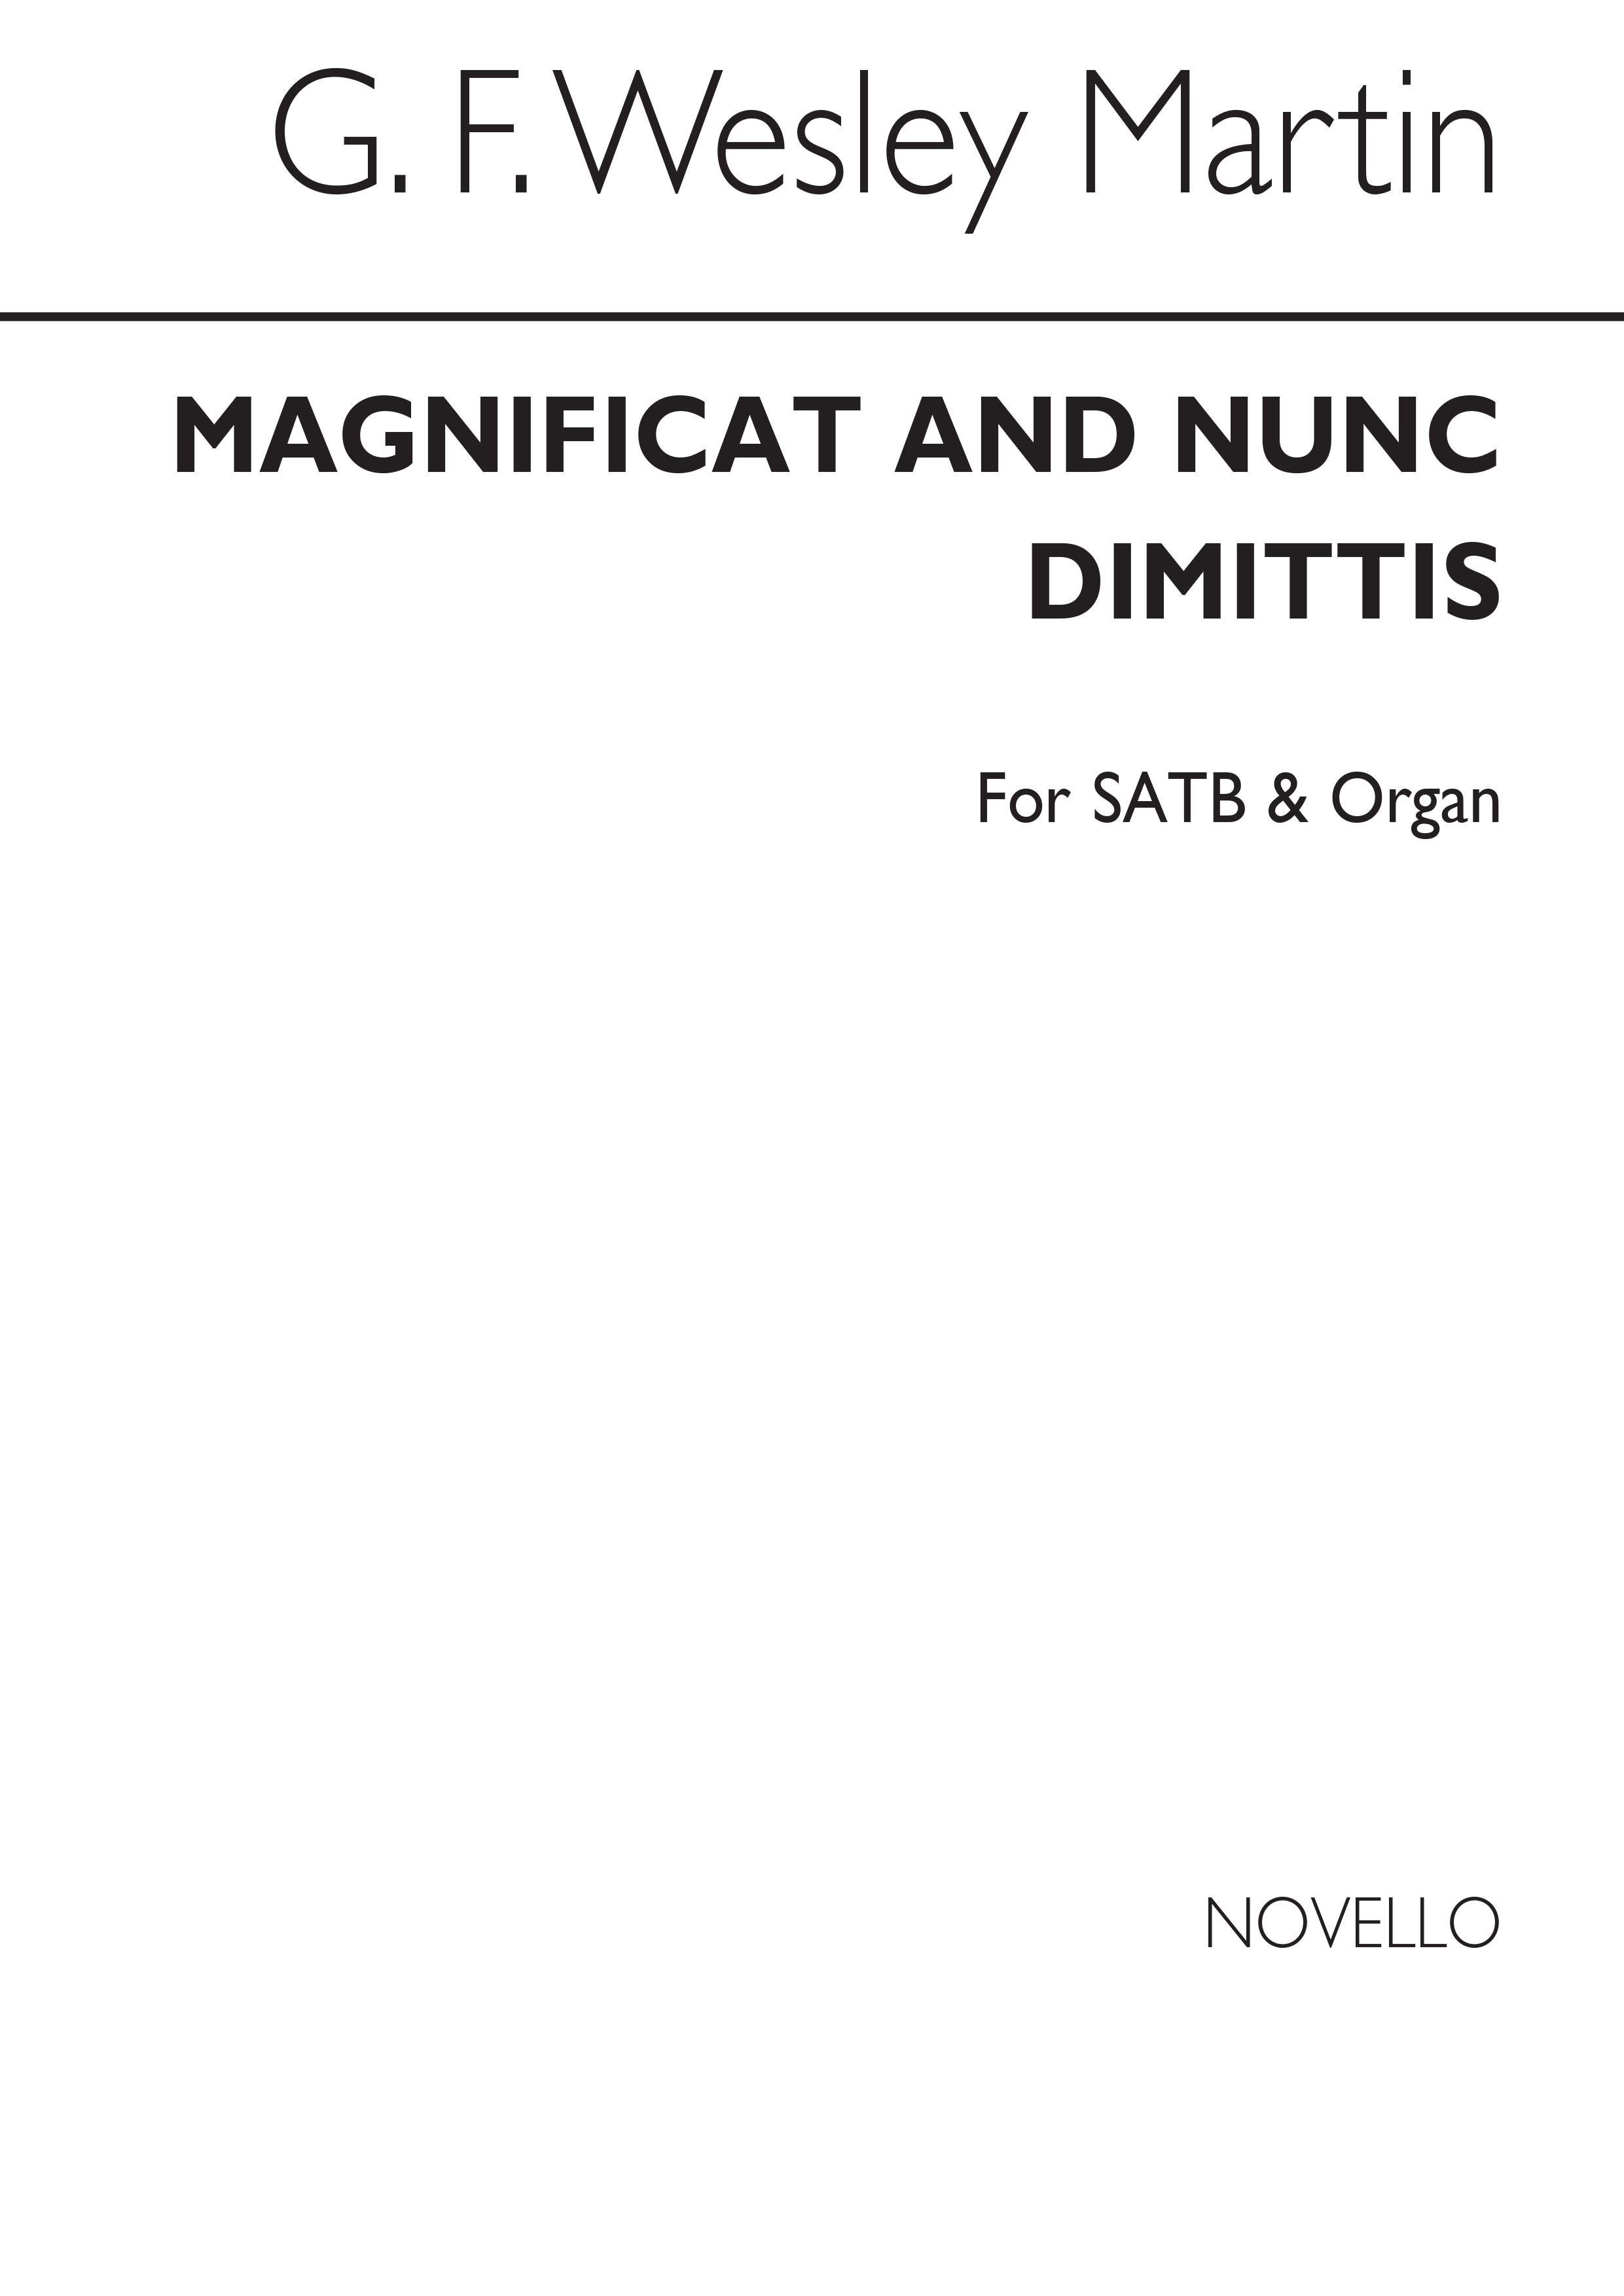 G.F. Wesley Martin: Magnificat And Nunc Dimittis In E Satb/Organ